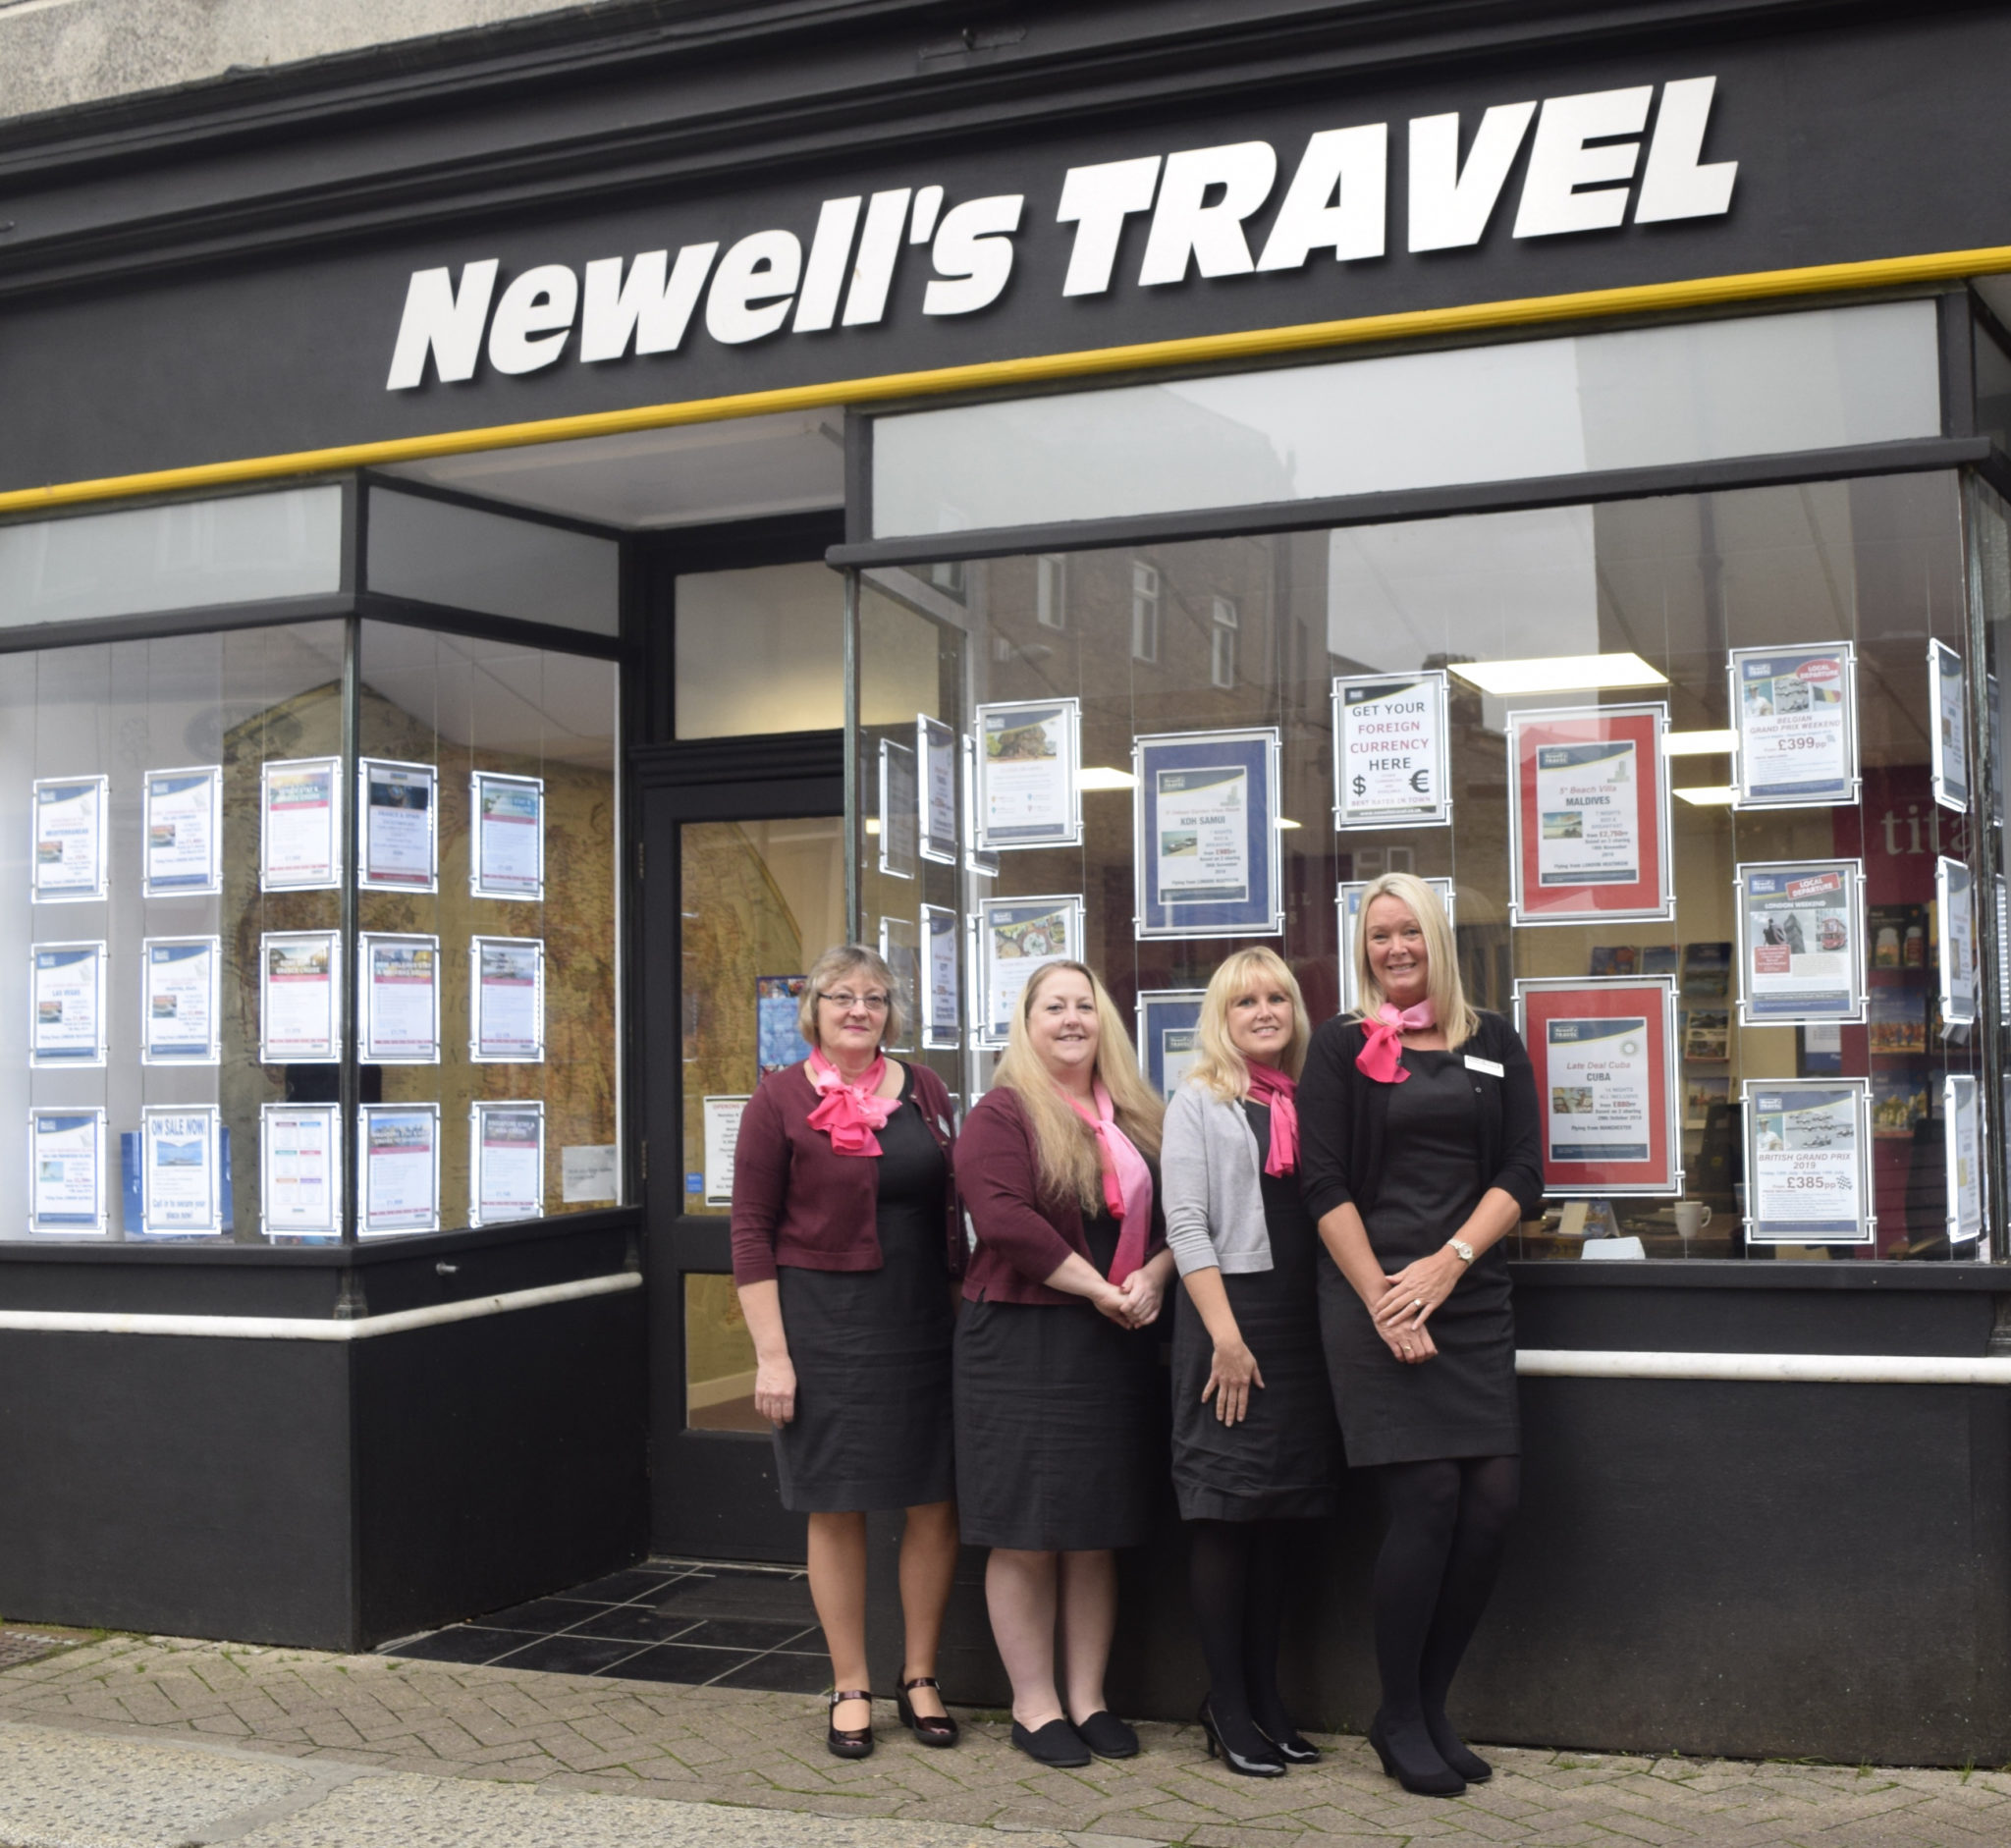 newells travel agent newquay